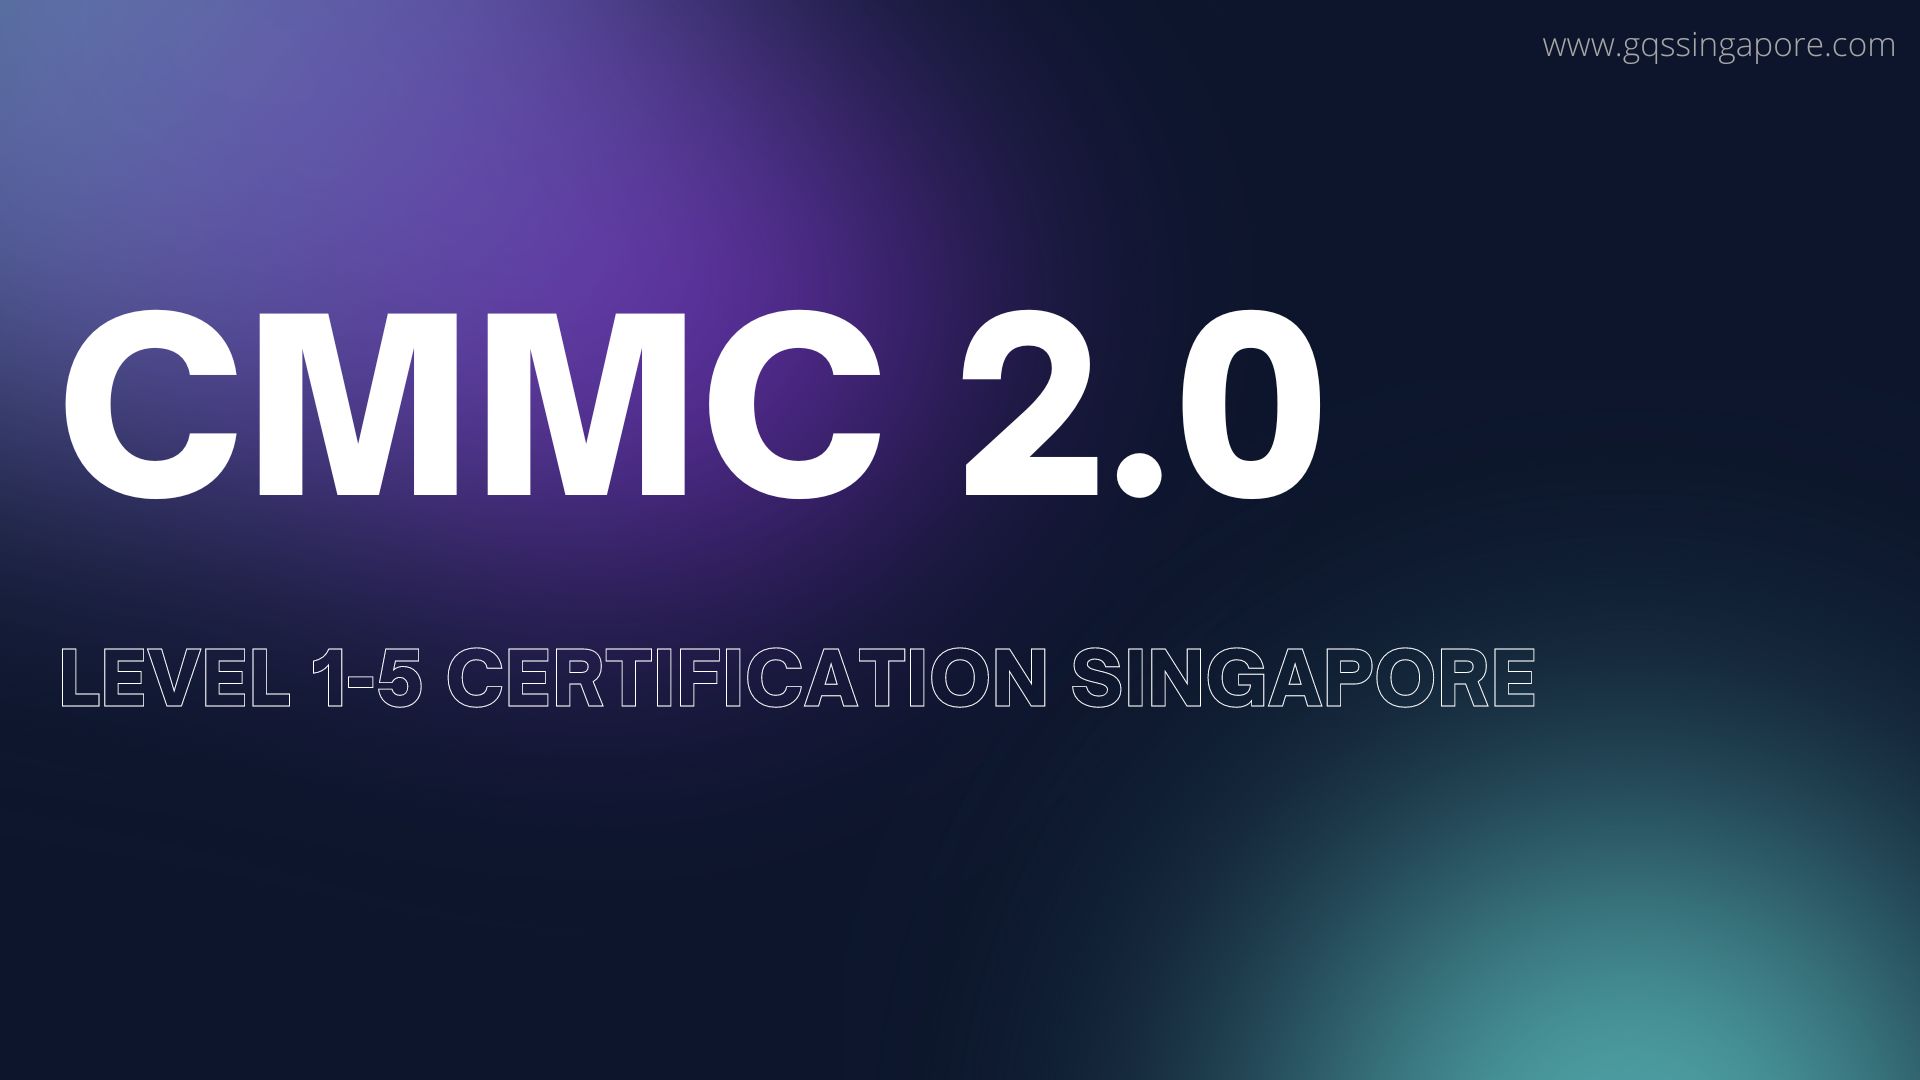 CMMC 2.0 LEVEL 1-5 CERTIFICATION SINGAPORE